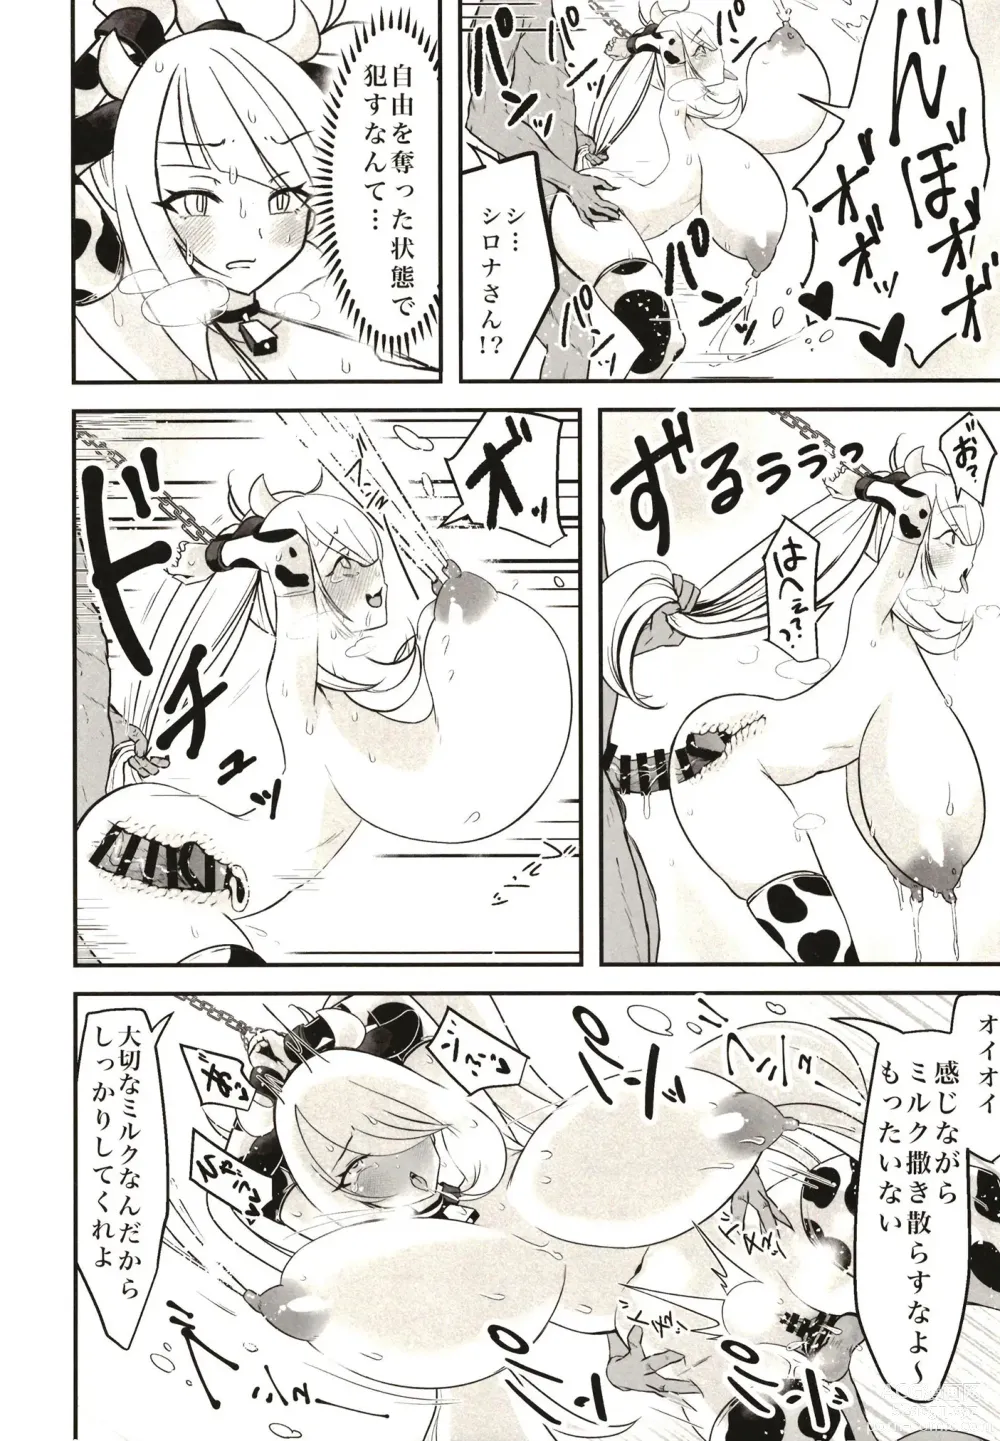 Page 6 of doujinshi Pocket Milk